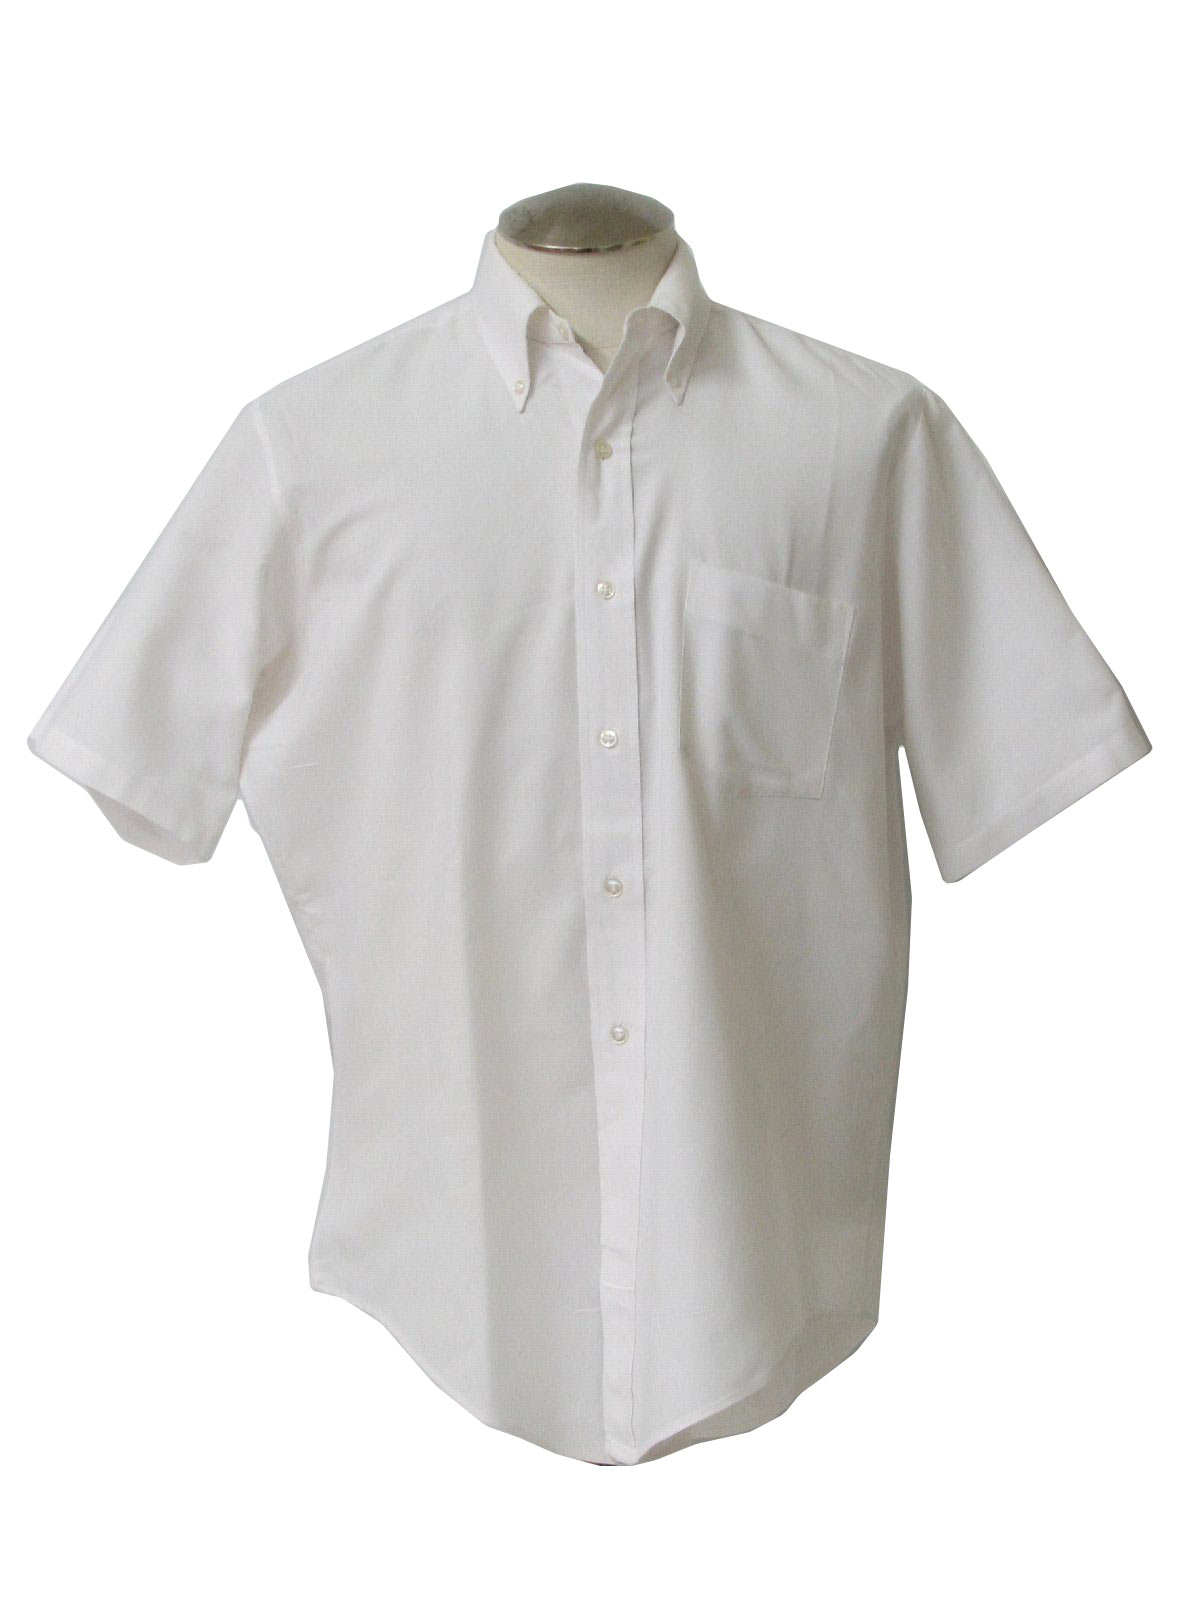 Macys Supre Macy 60's Vintage Shirt: 60s -Macys Supre Macy- Mens white ...